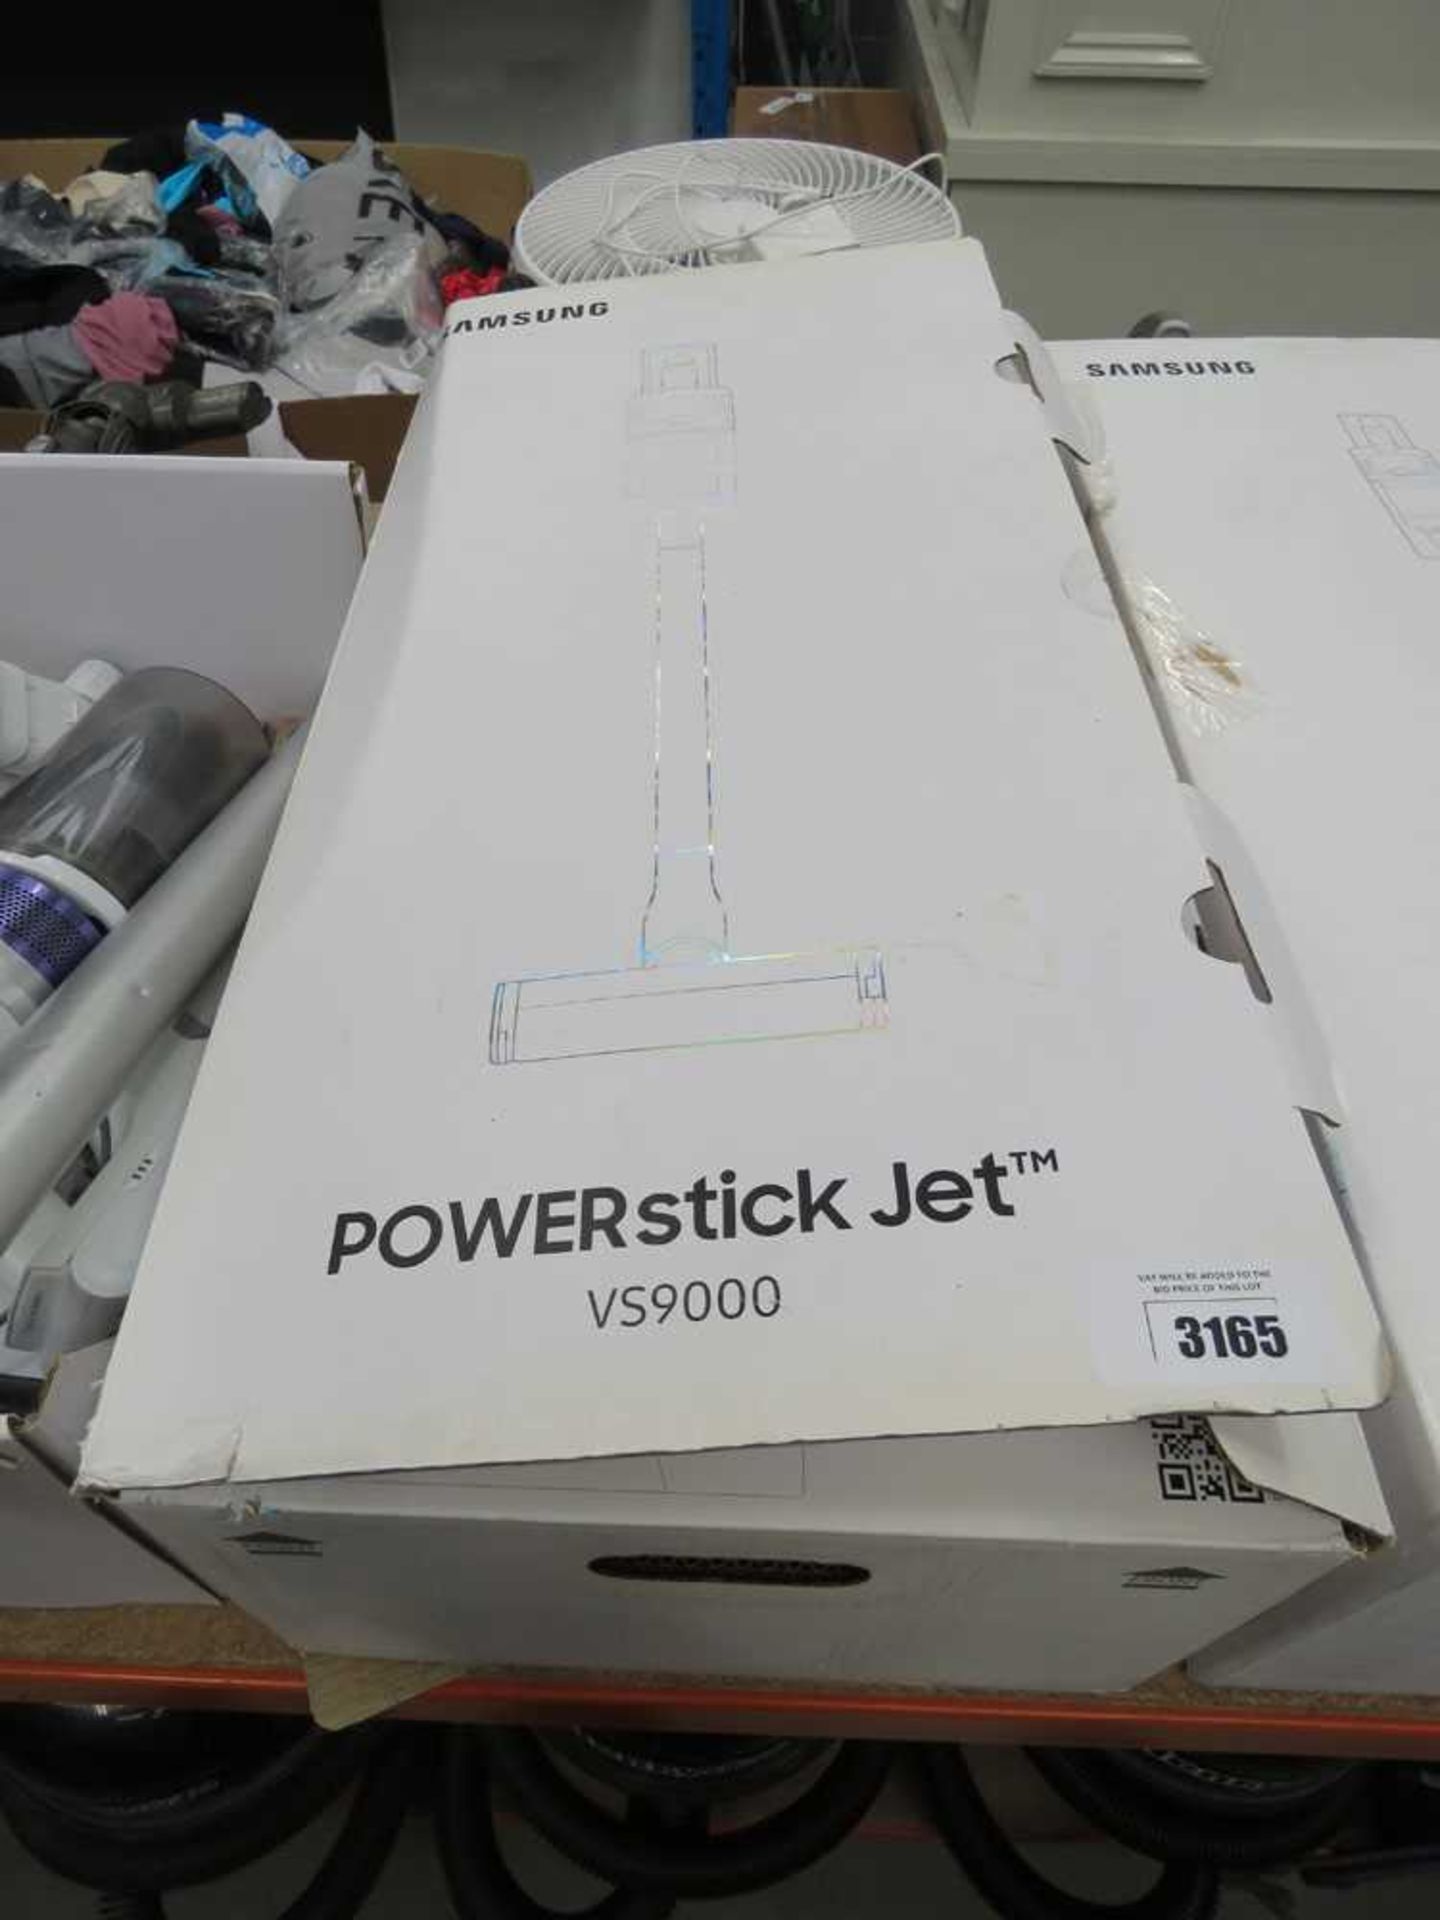 +VAT Samsung power stick jet V79000 vacuum cleaner in box